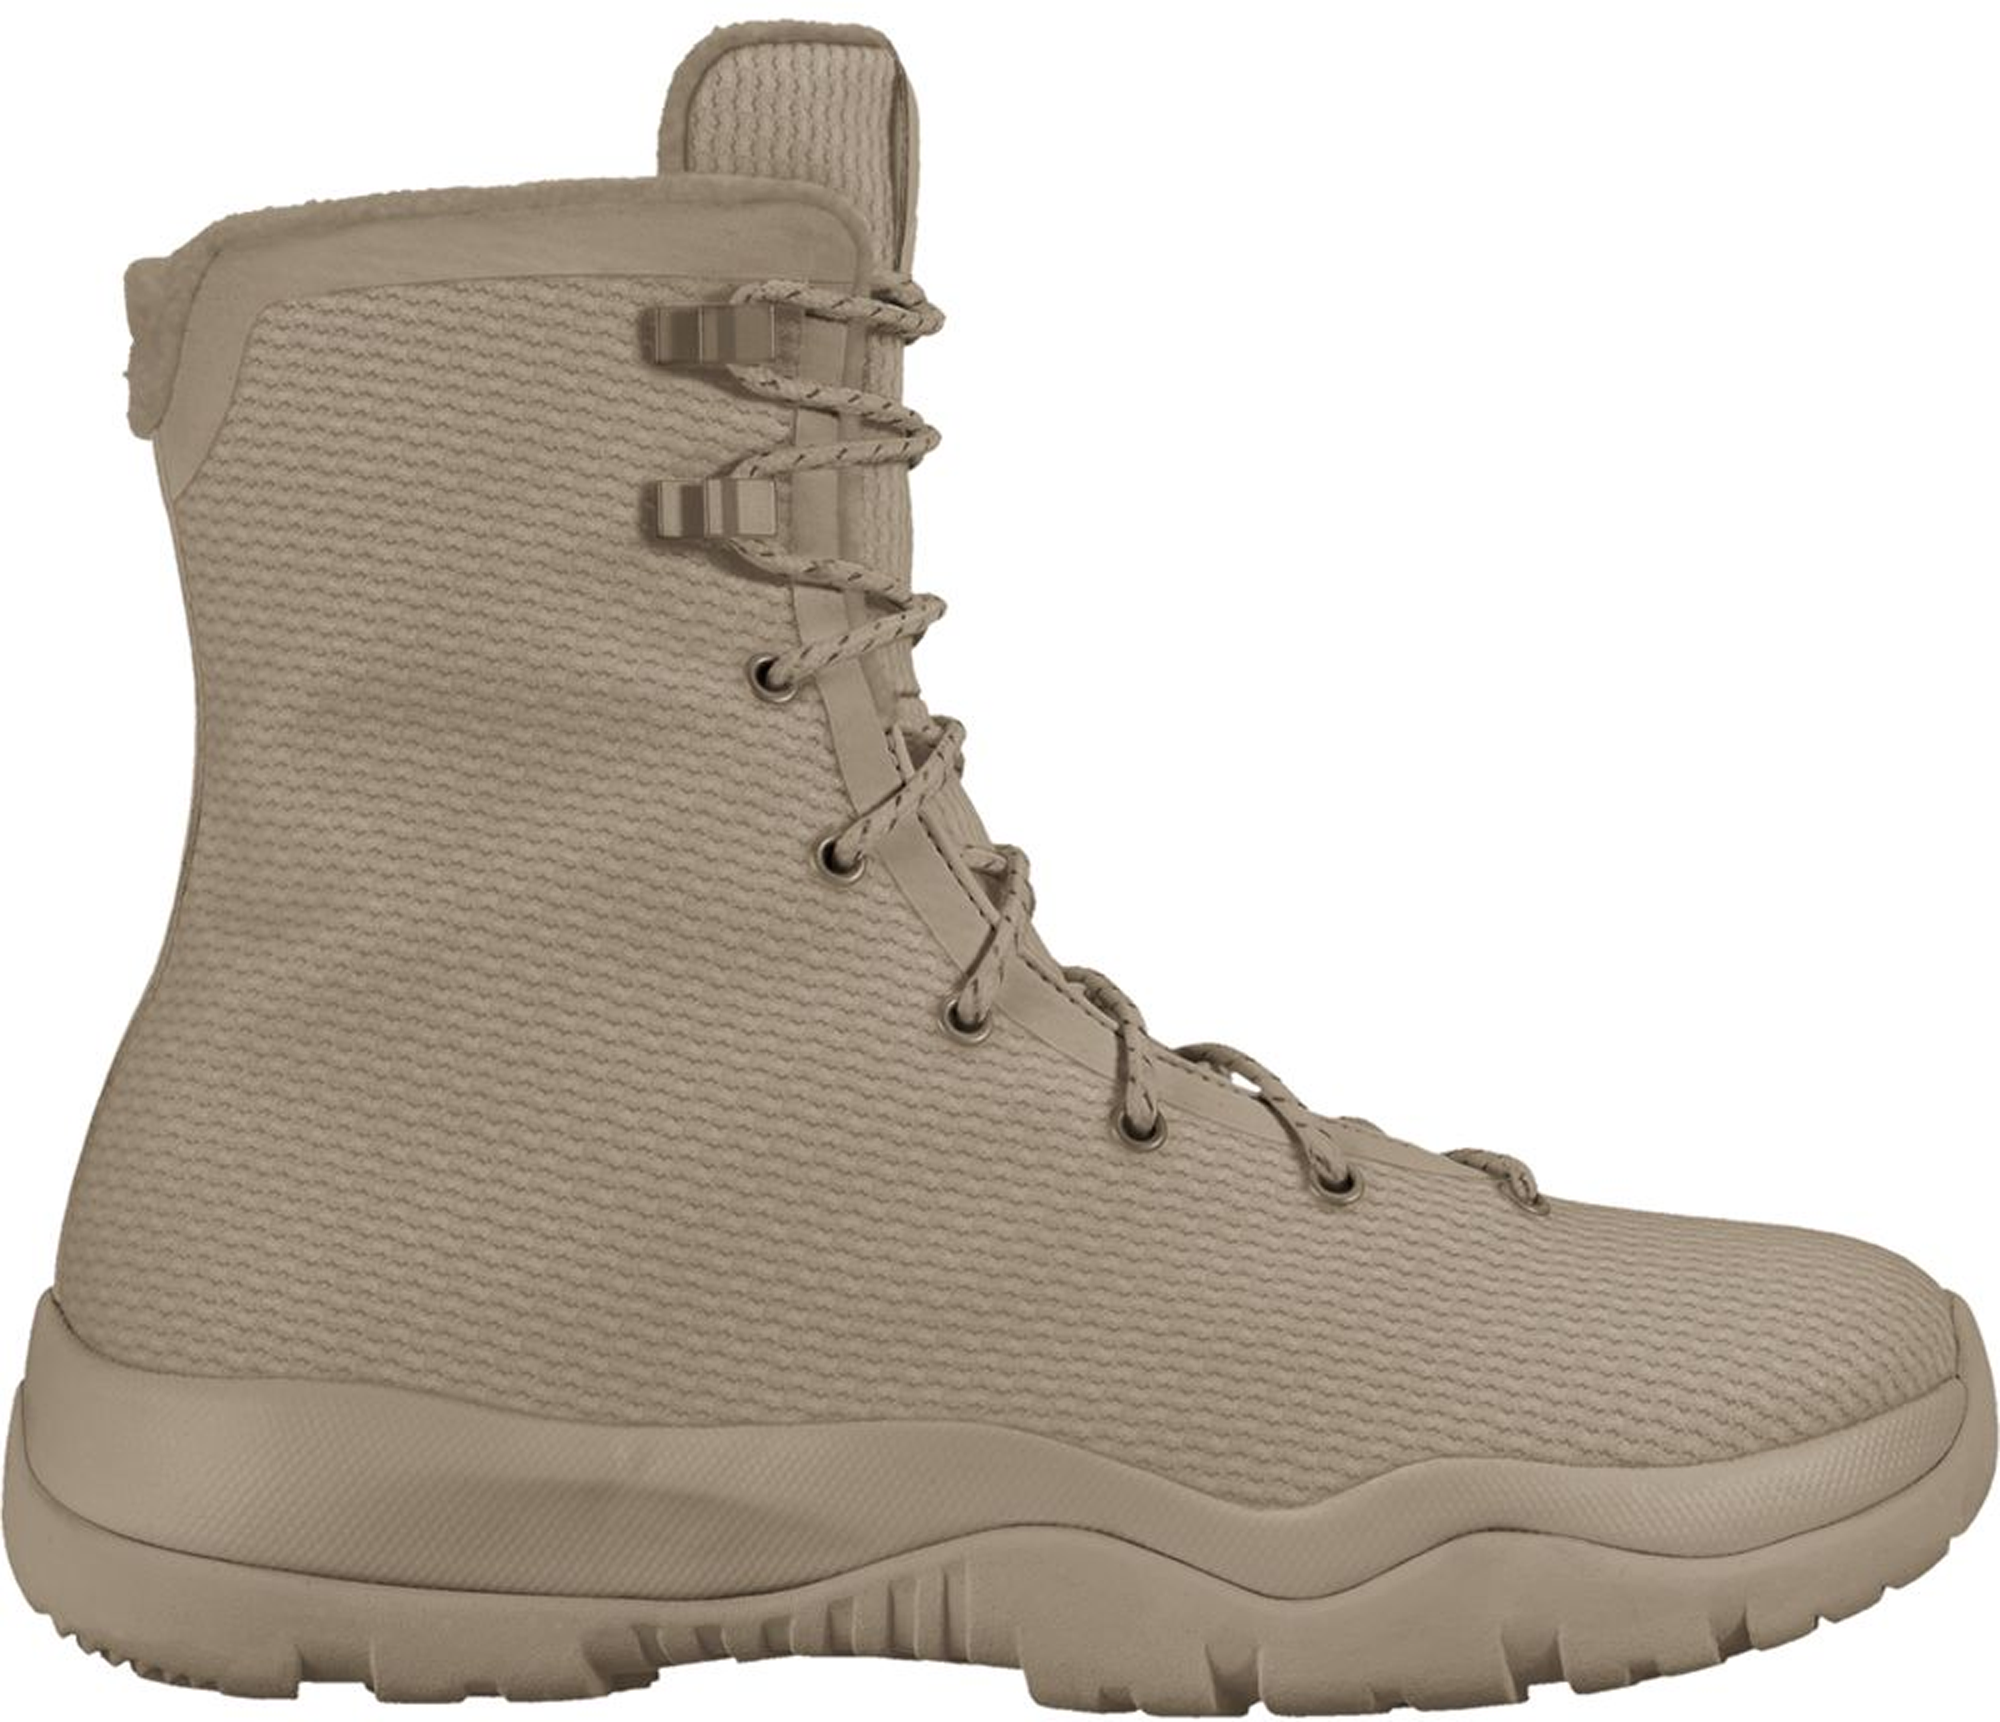 Jordan Future Boot Khaki - 878222-205 - US